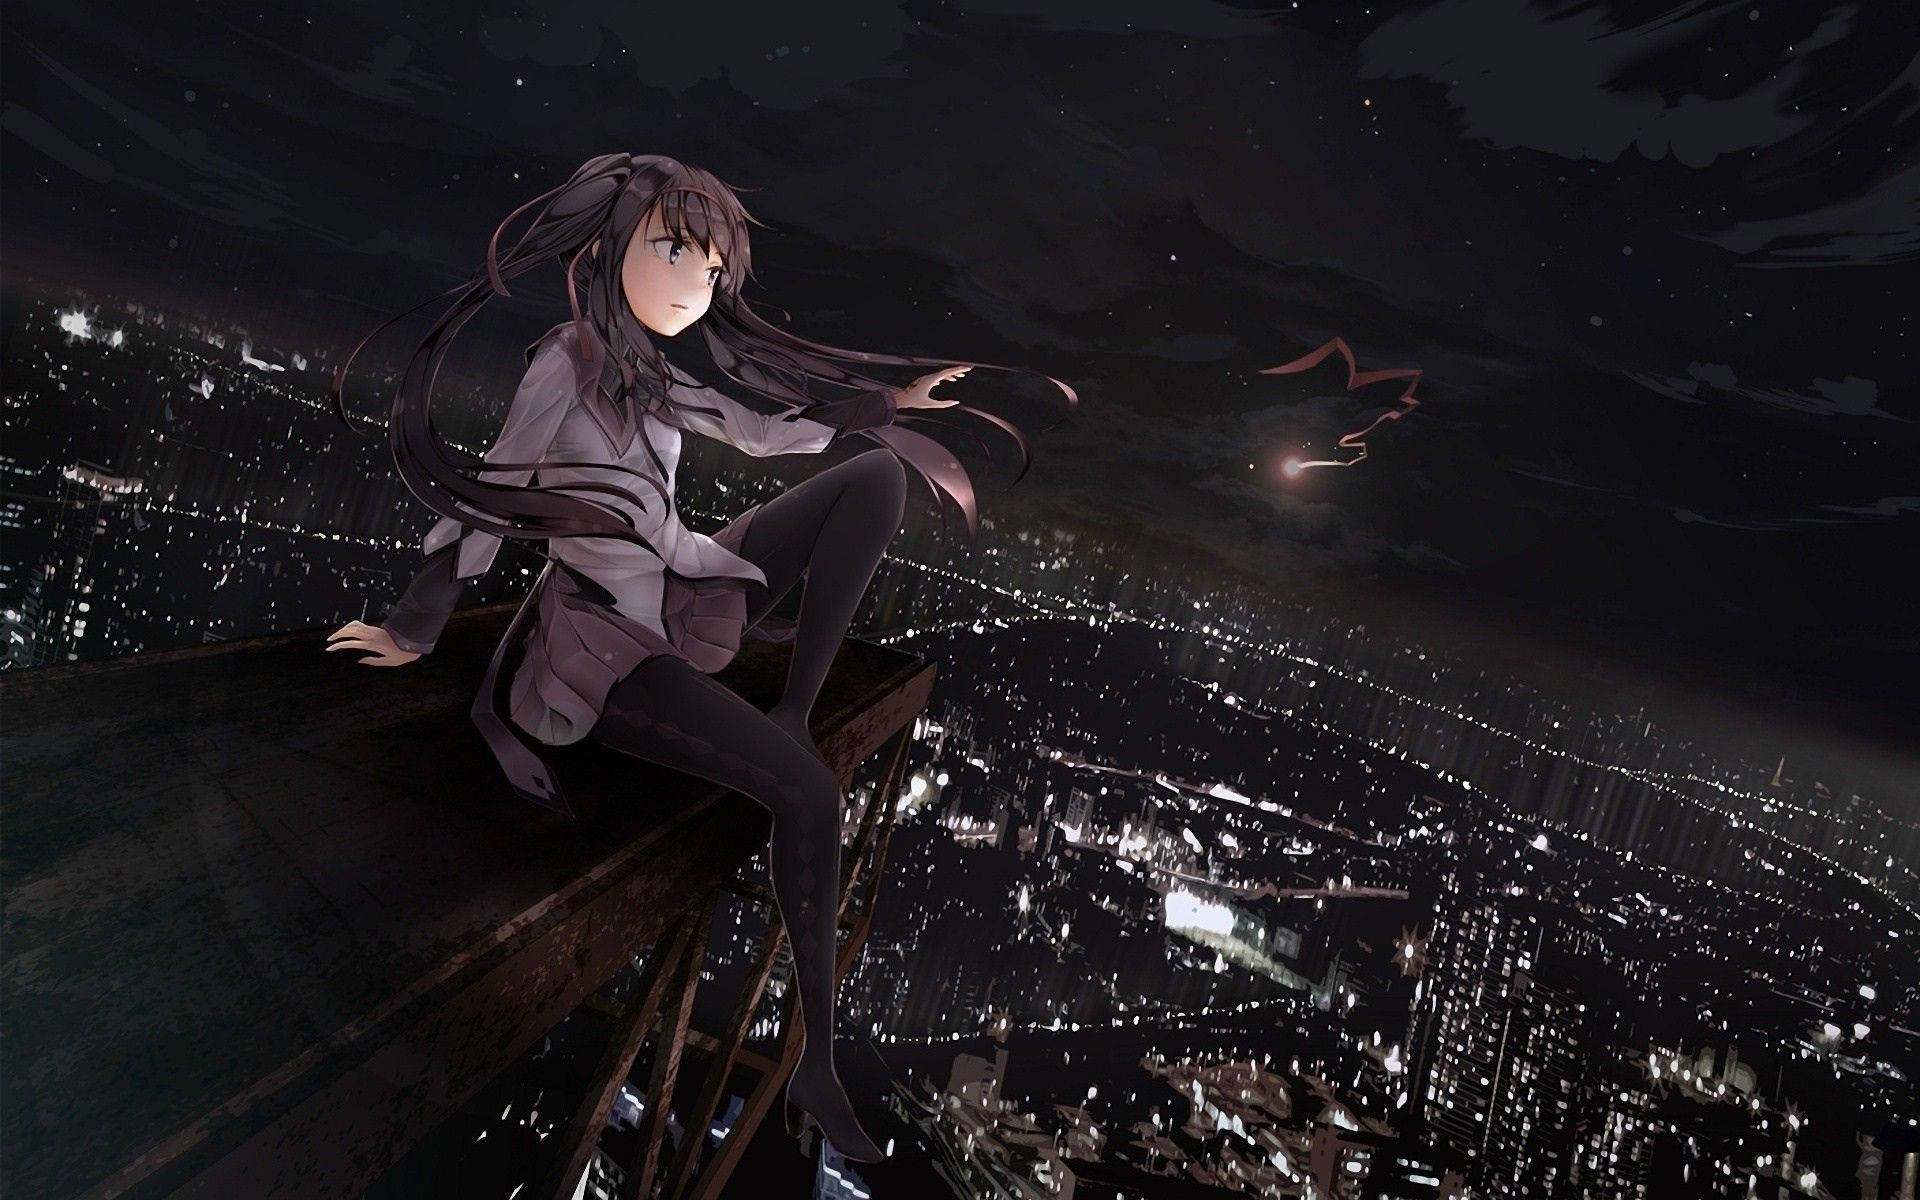 Anime Girl Sad Alone On Ledge City View Wallpaper